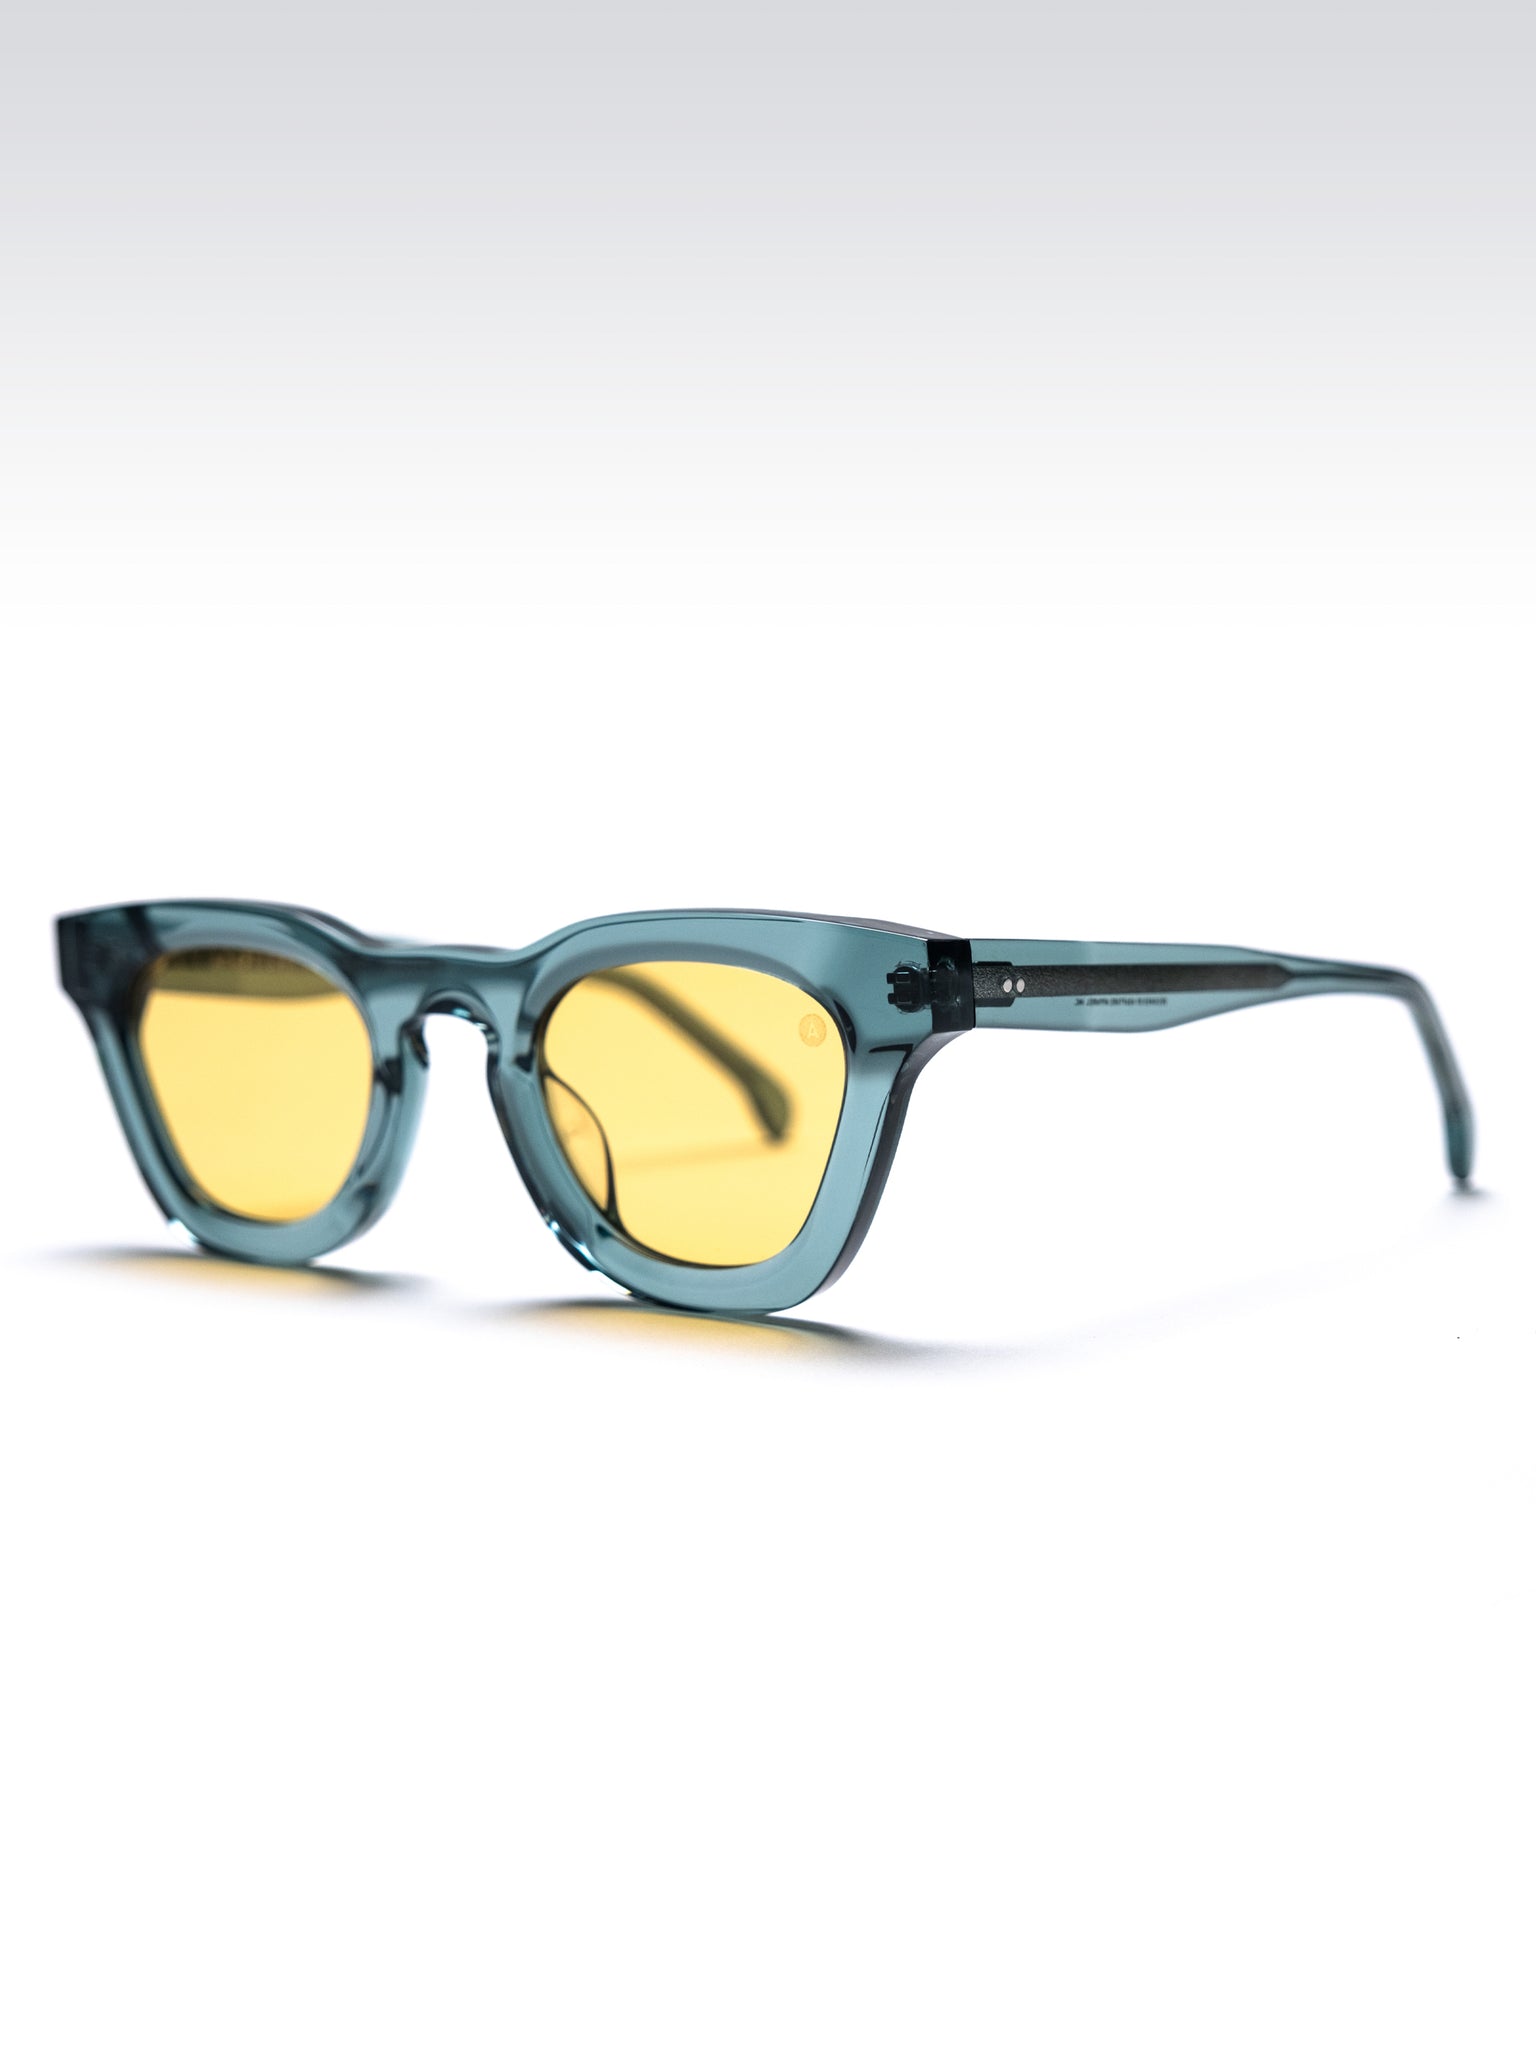 Standard Sunglasses Amazon